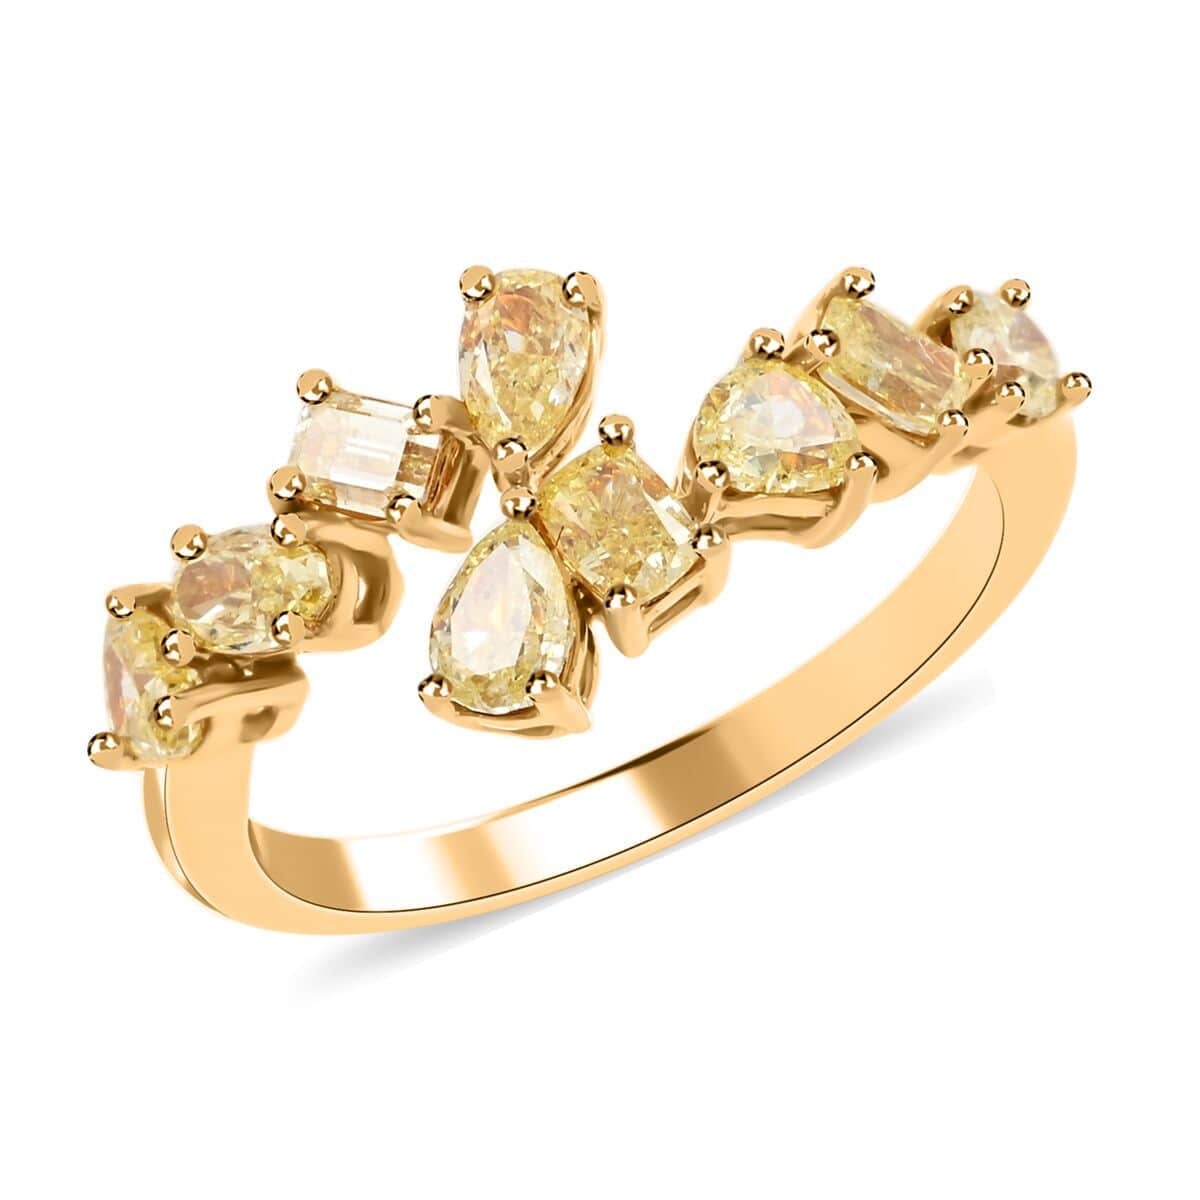 Ankur Treasure Chest Modani 18K Yellow Gold Natural Yellow Diamond (I1)  Ring (Size 8.0) (Del. in 10-15 Days) 1.30 ctw